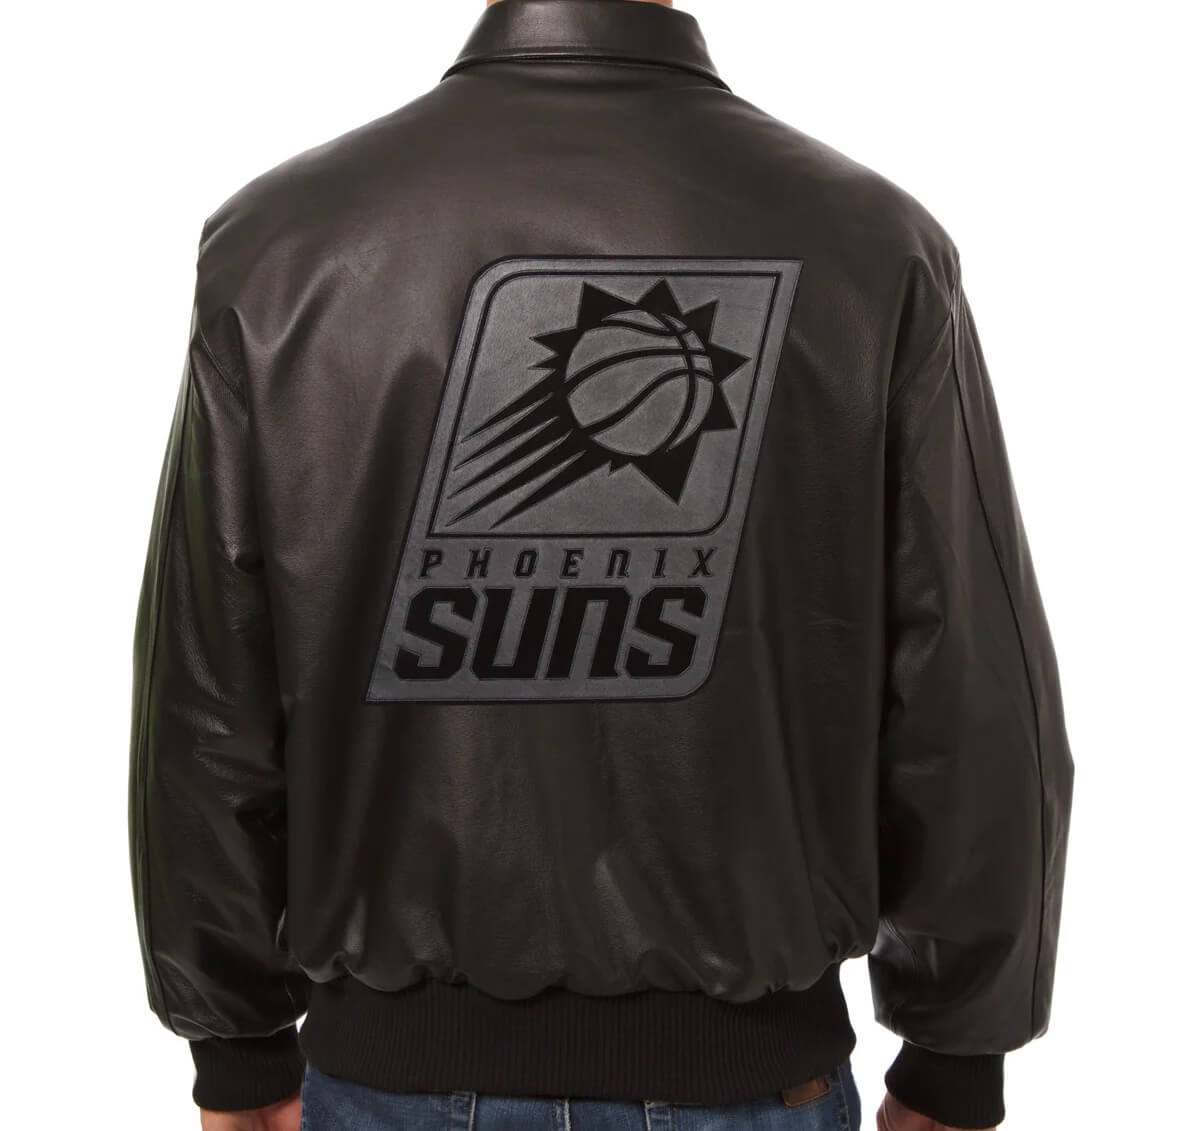 NBA Phoenix Suns Full Black Leather Jacket - Maker of Jacket